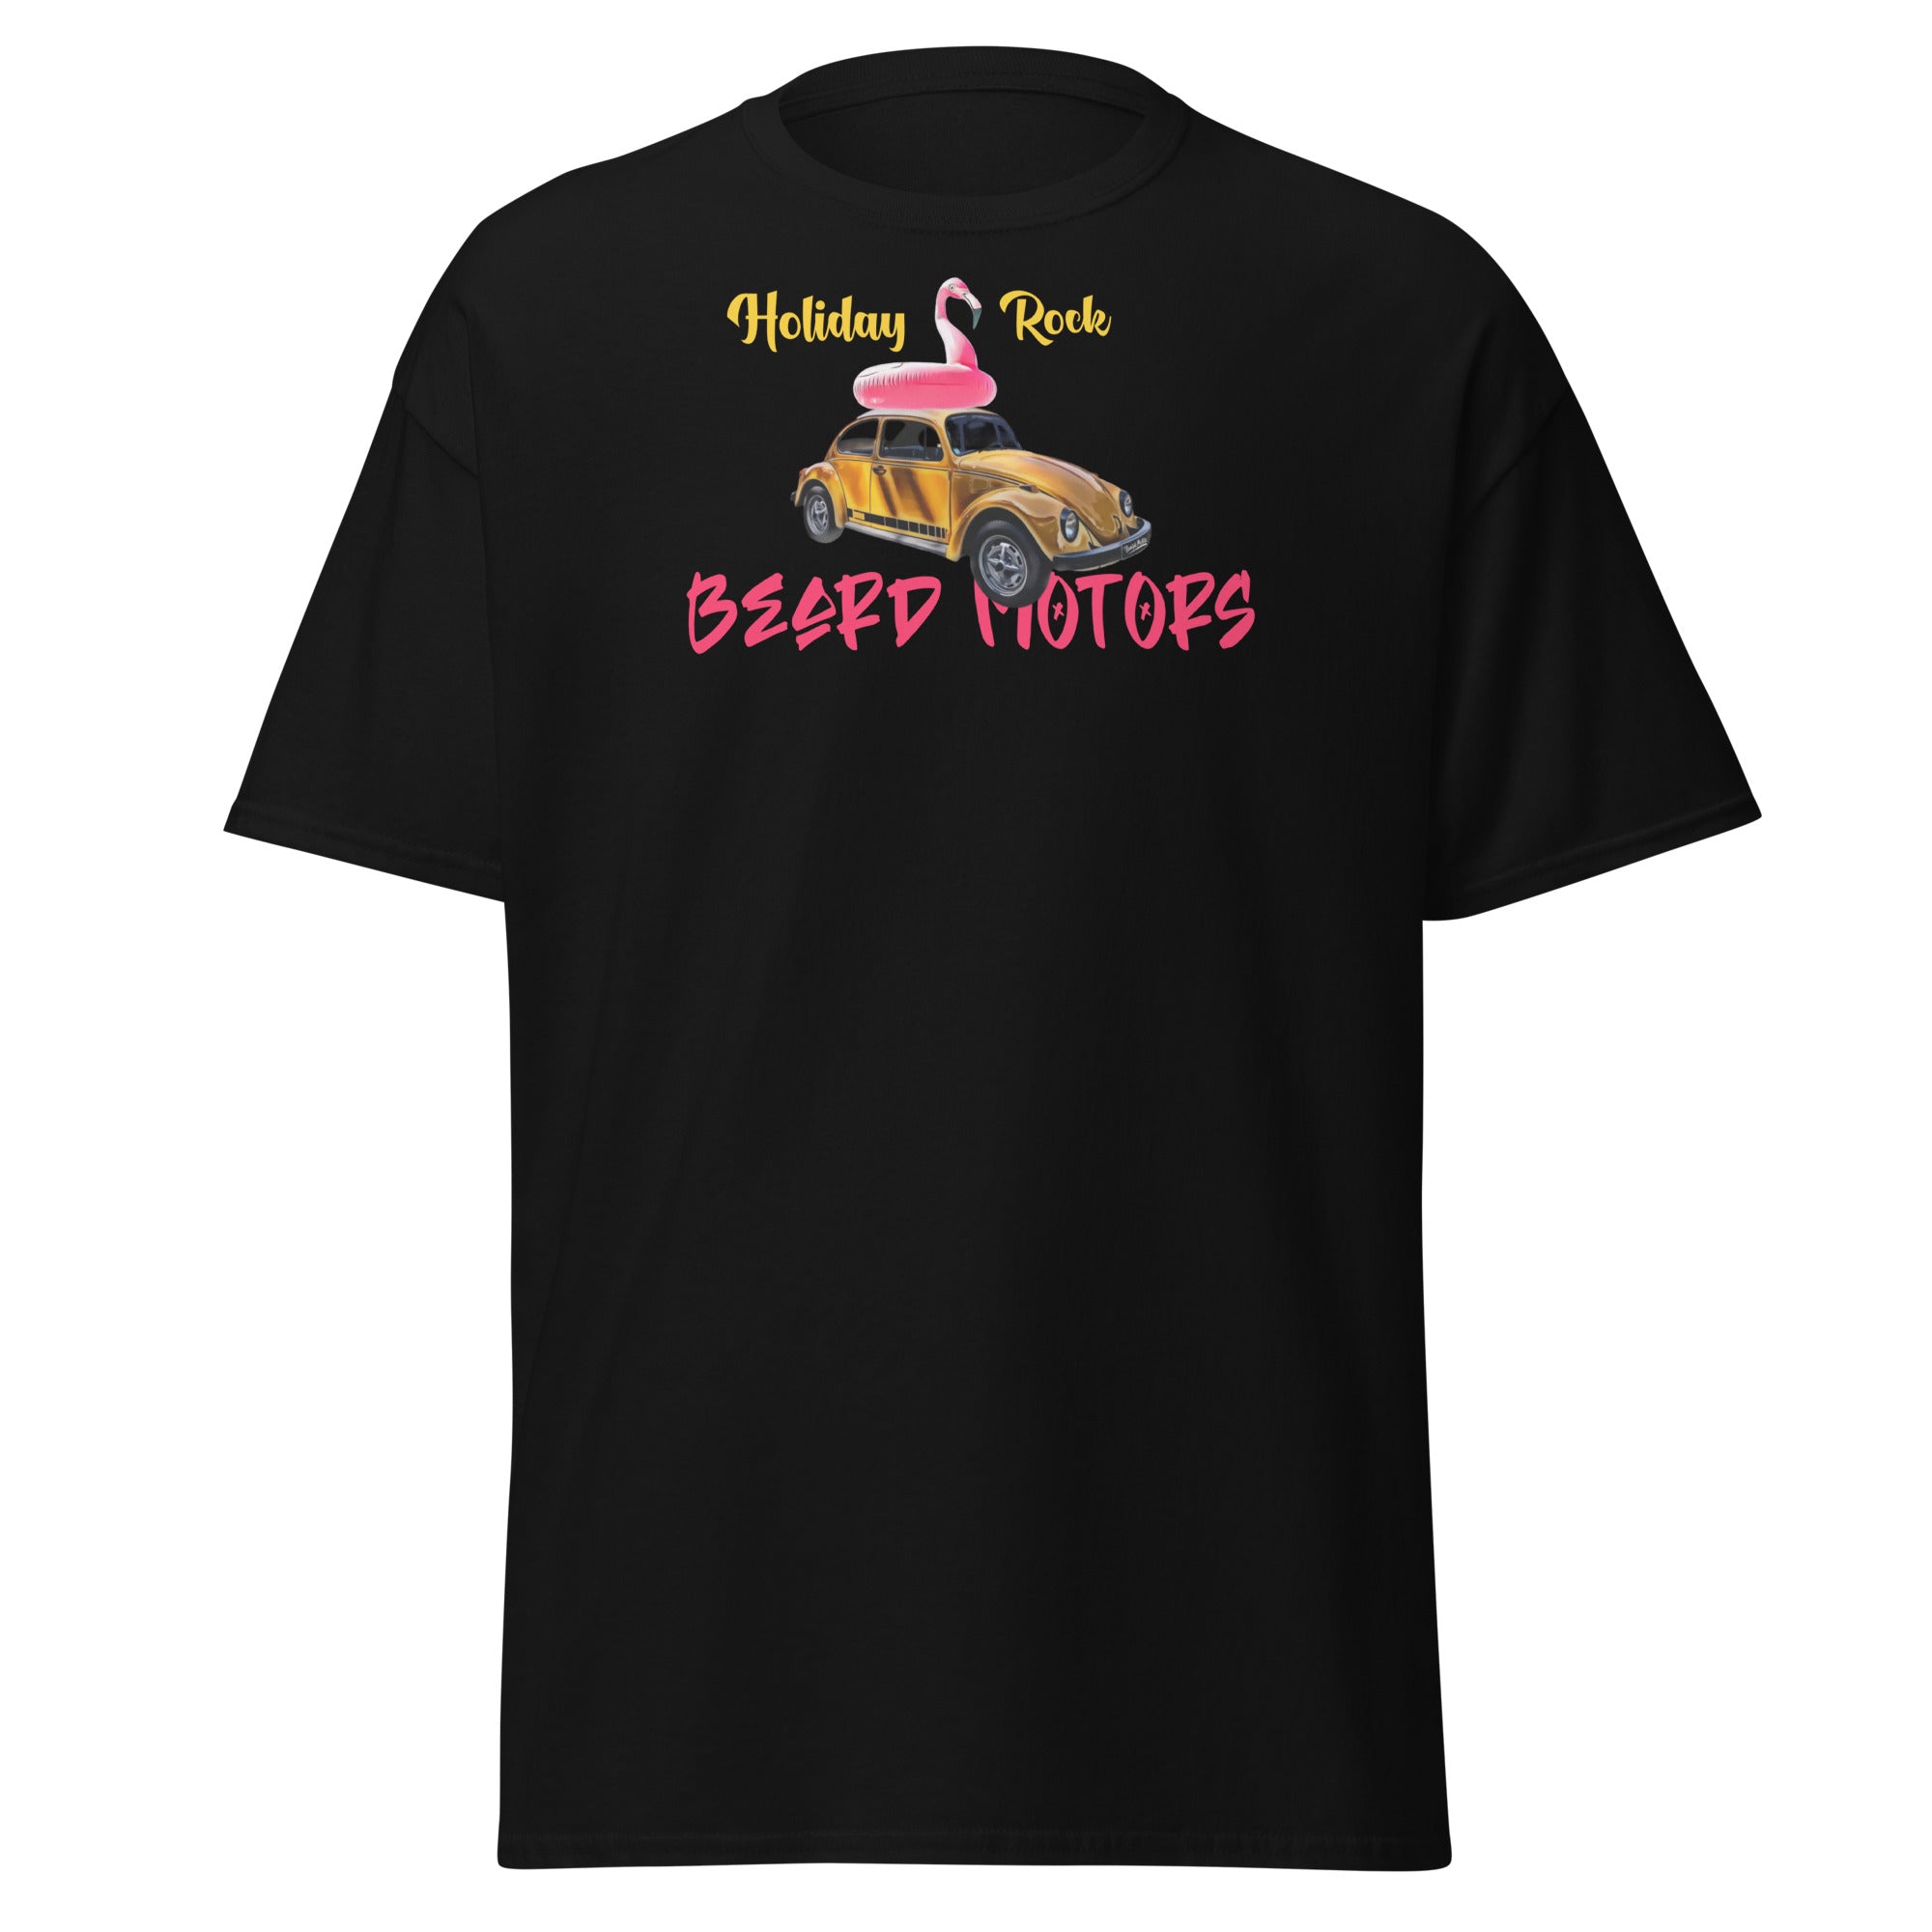 Beard Motors Holiday Rock Beetle T-Shirt Black